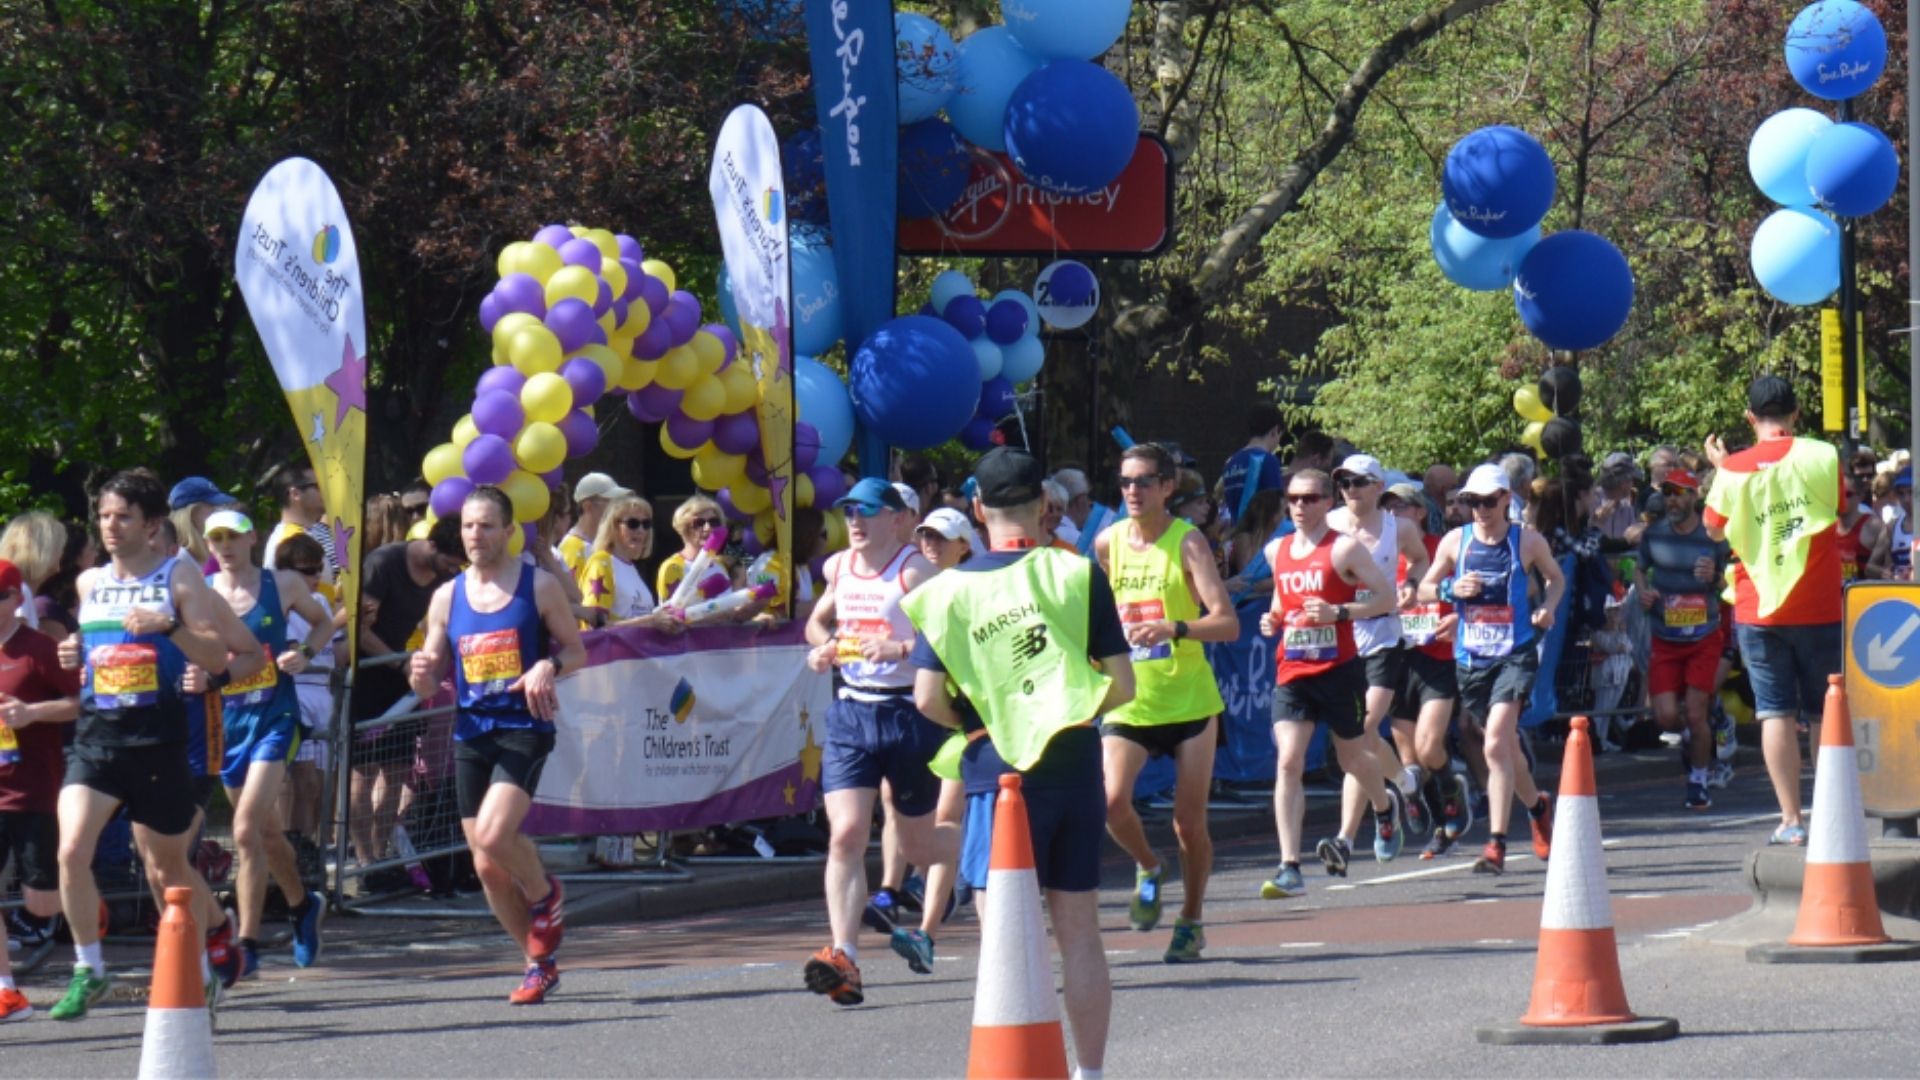 Team Hope running in the London Marathon 2018